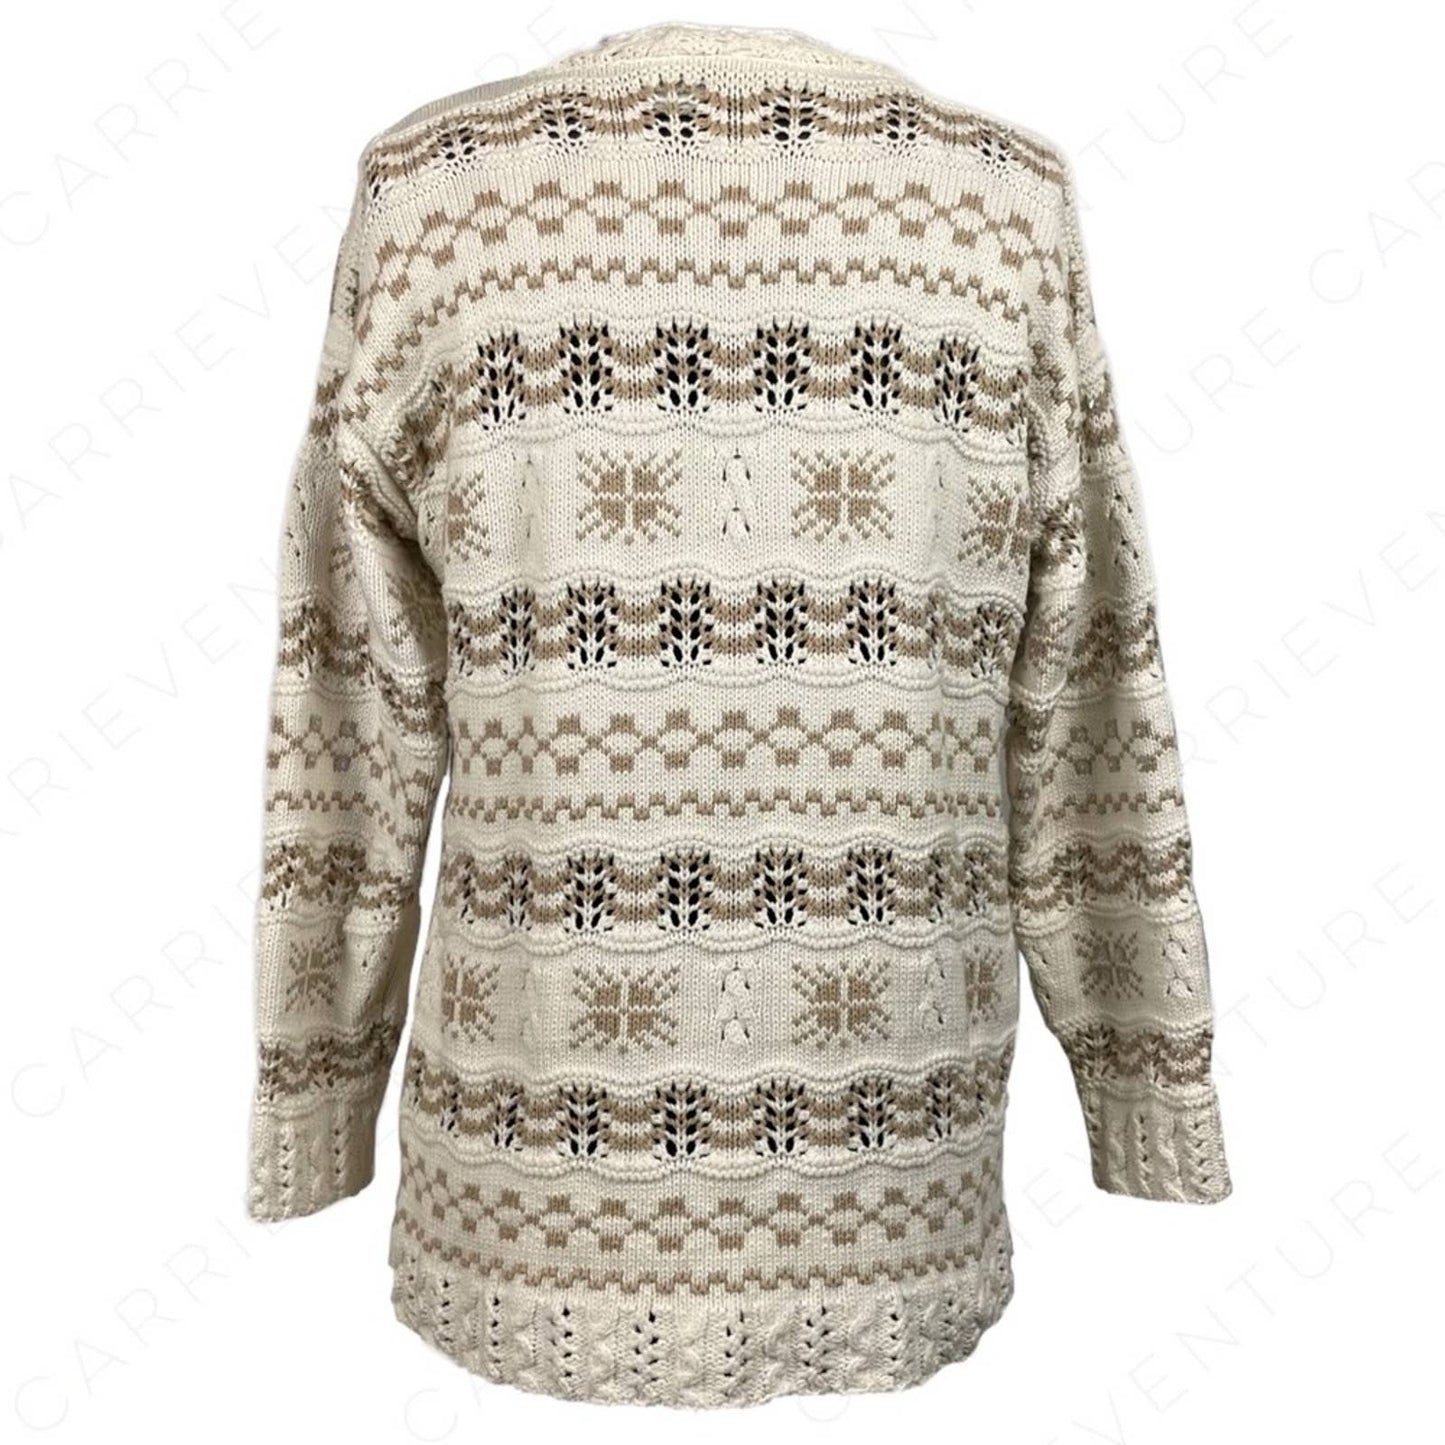 Vintage Lizsport Knit Sweater Winter Fair Isle Style Stripes Iridescent Sequins Size S